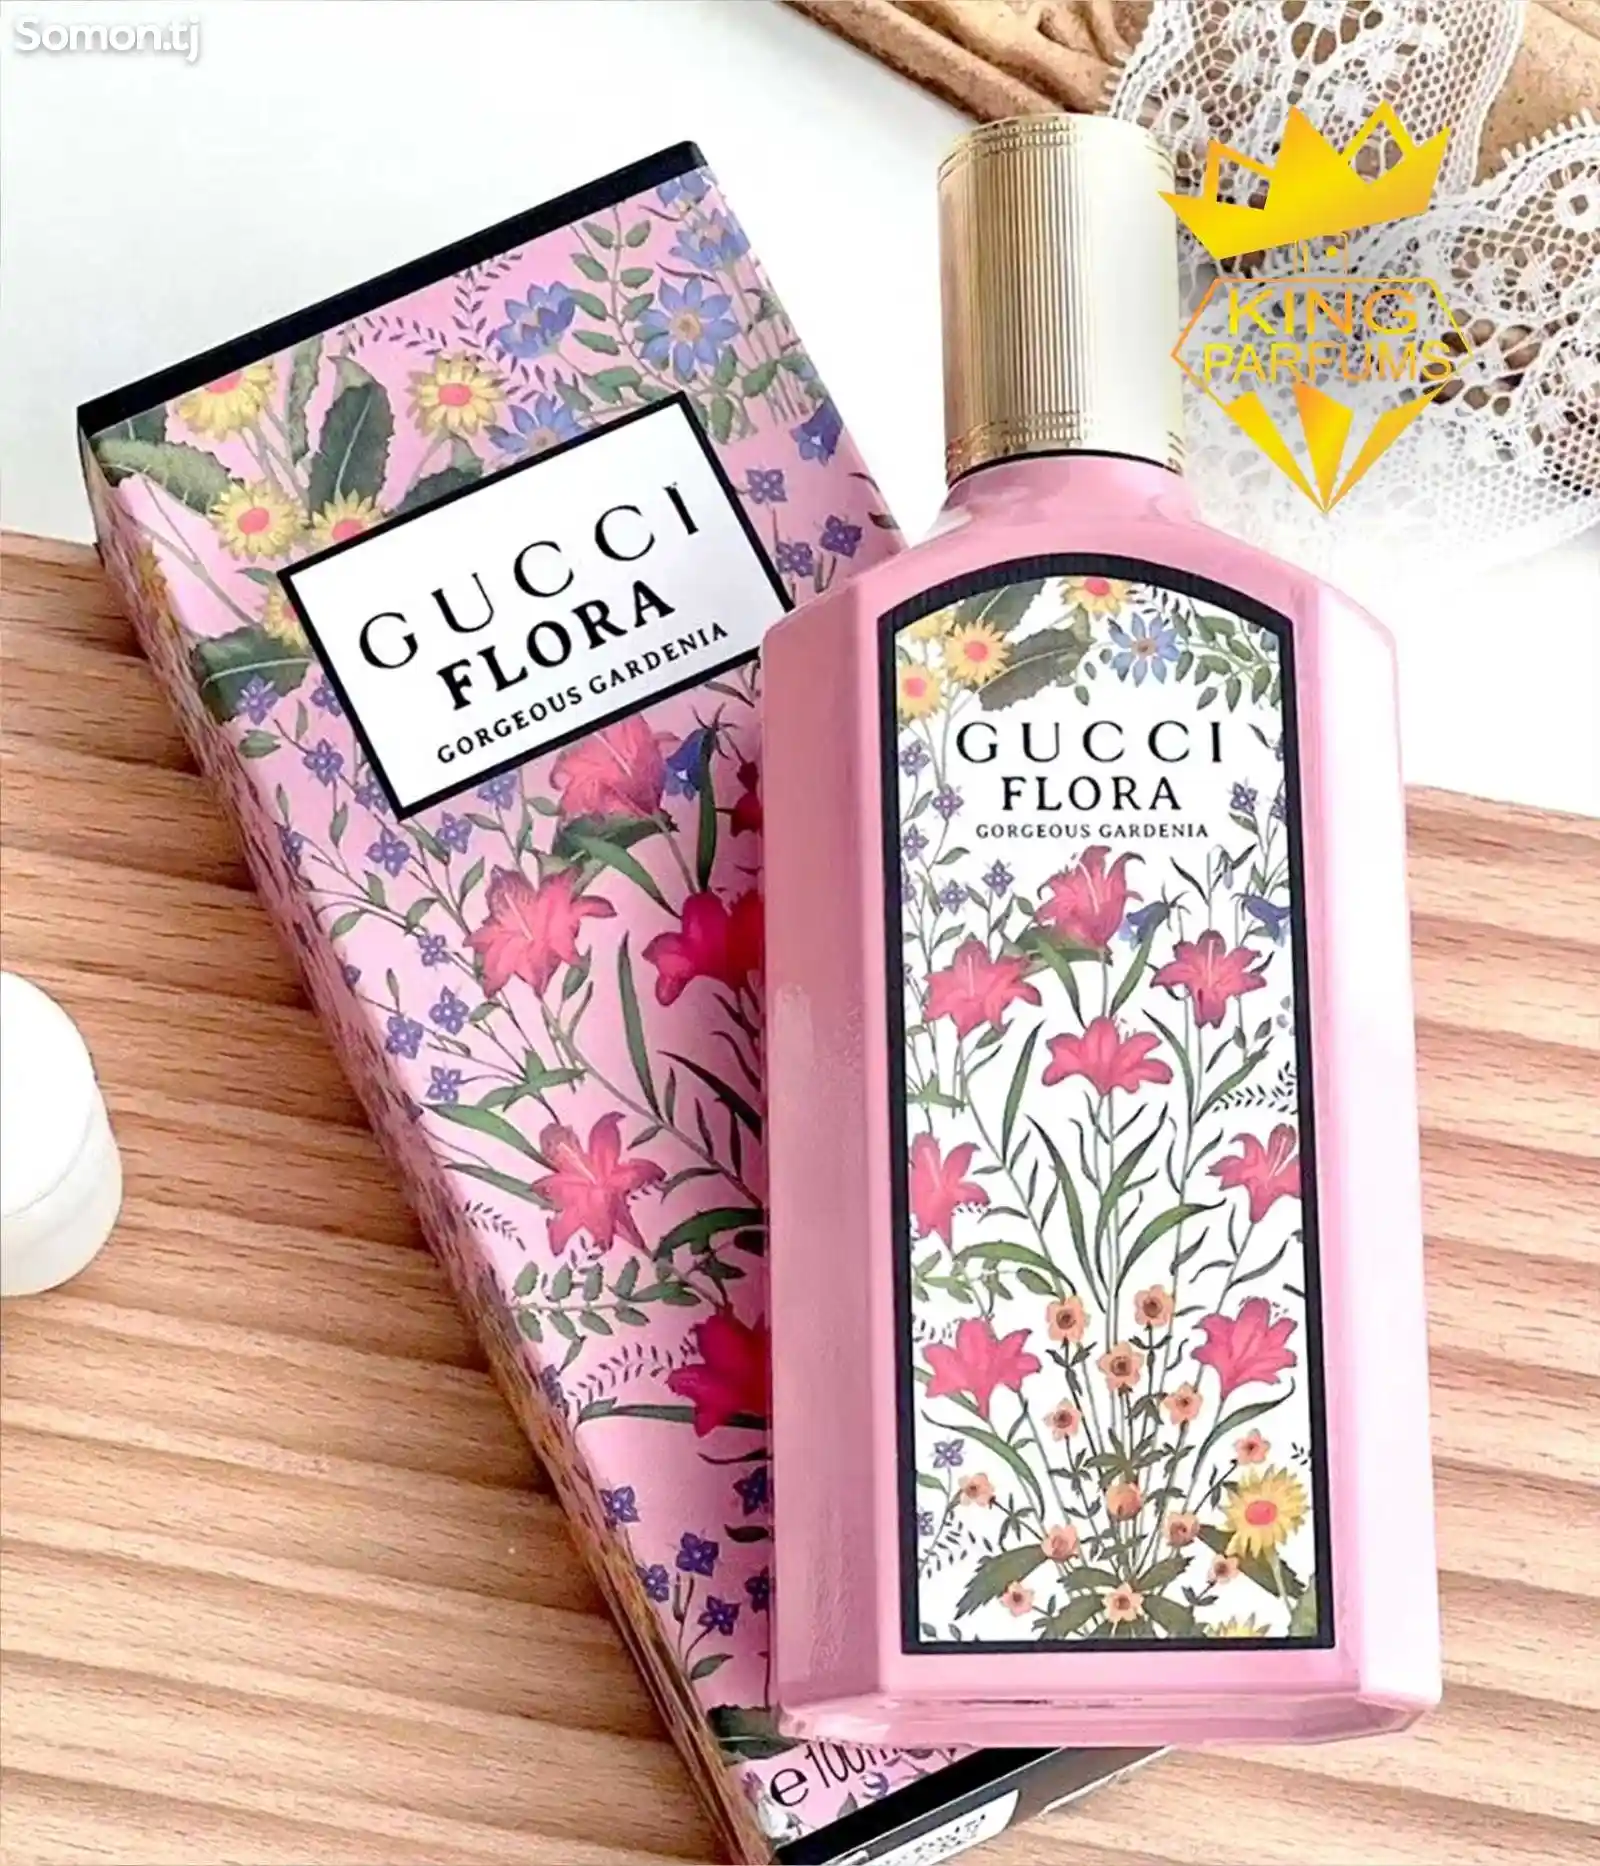 Парфюм Gucci flora gorgeus gardenia-2